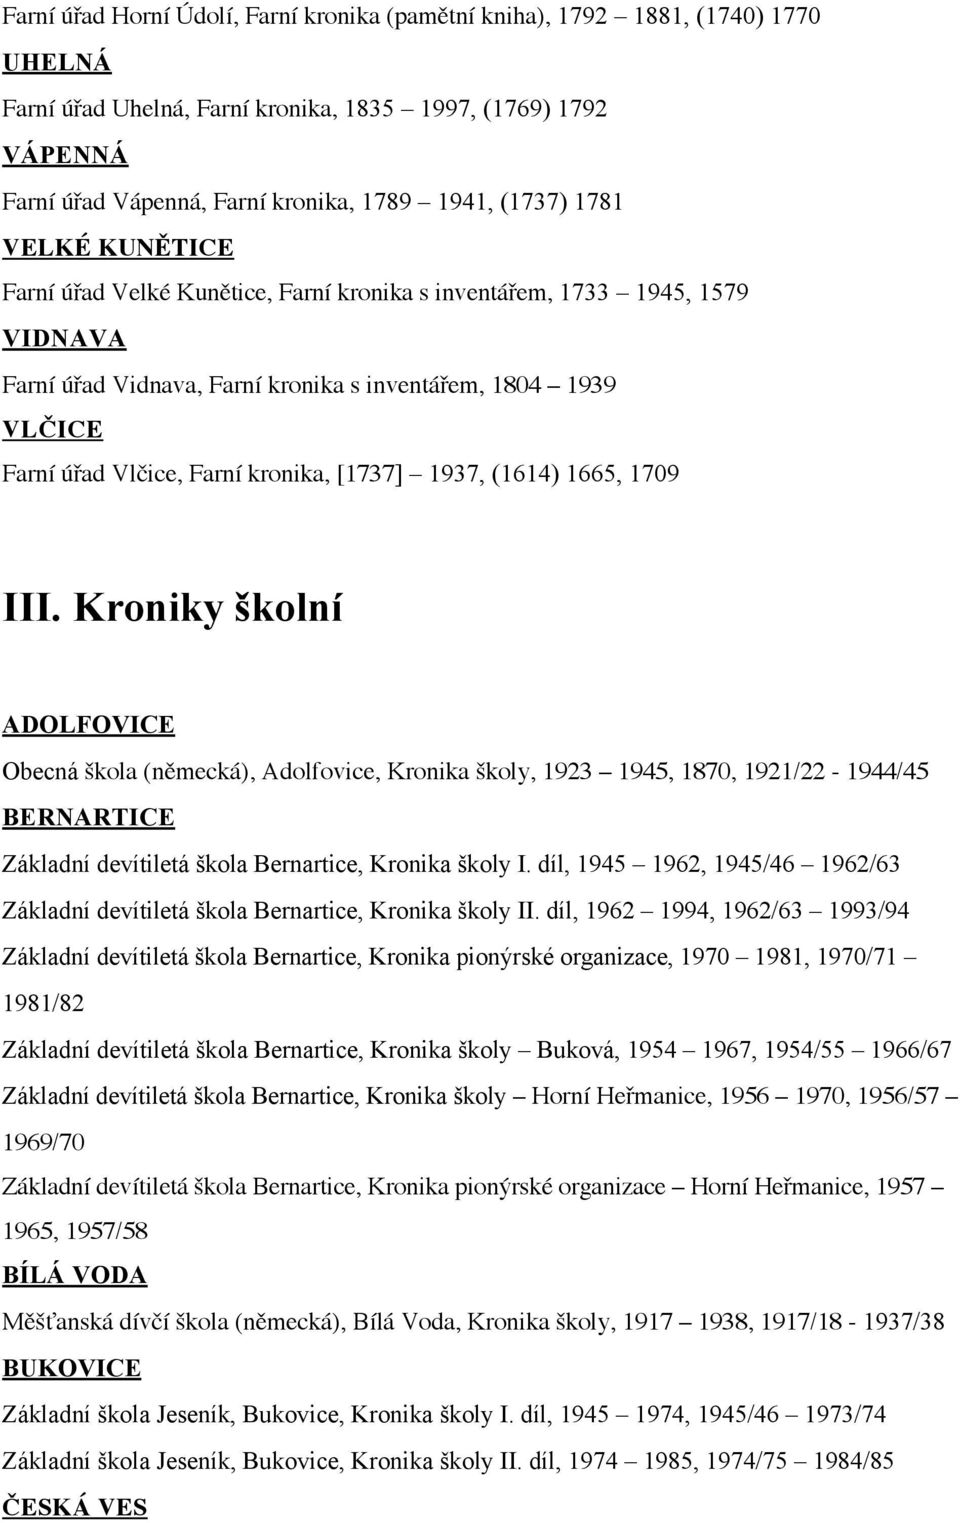 kronika, [1737] 1937, (1614) 1665, 1709 III.